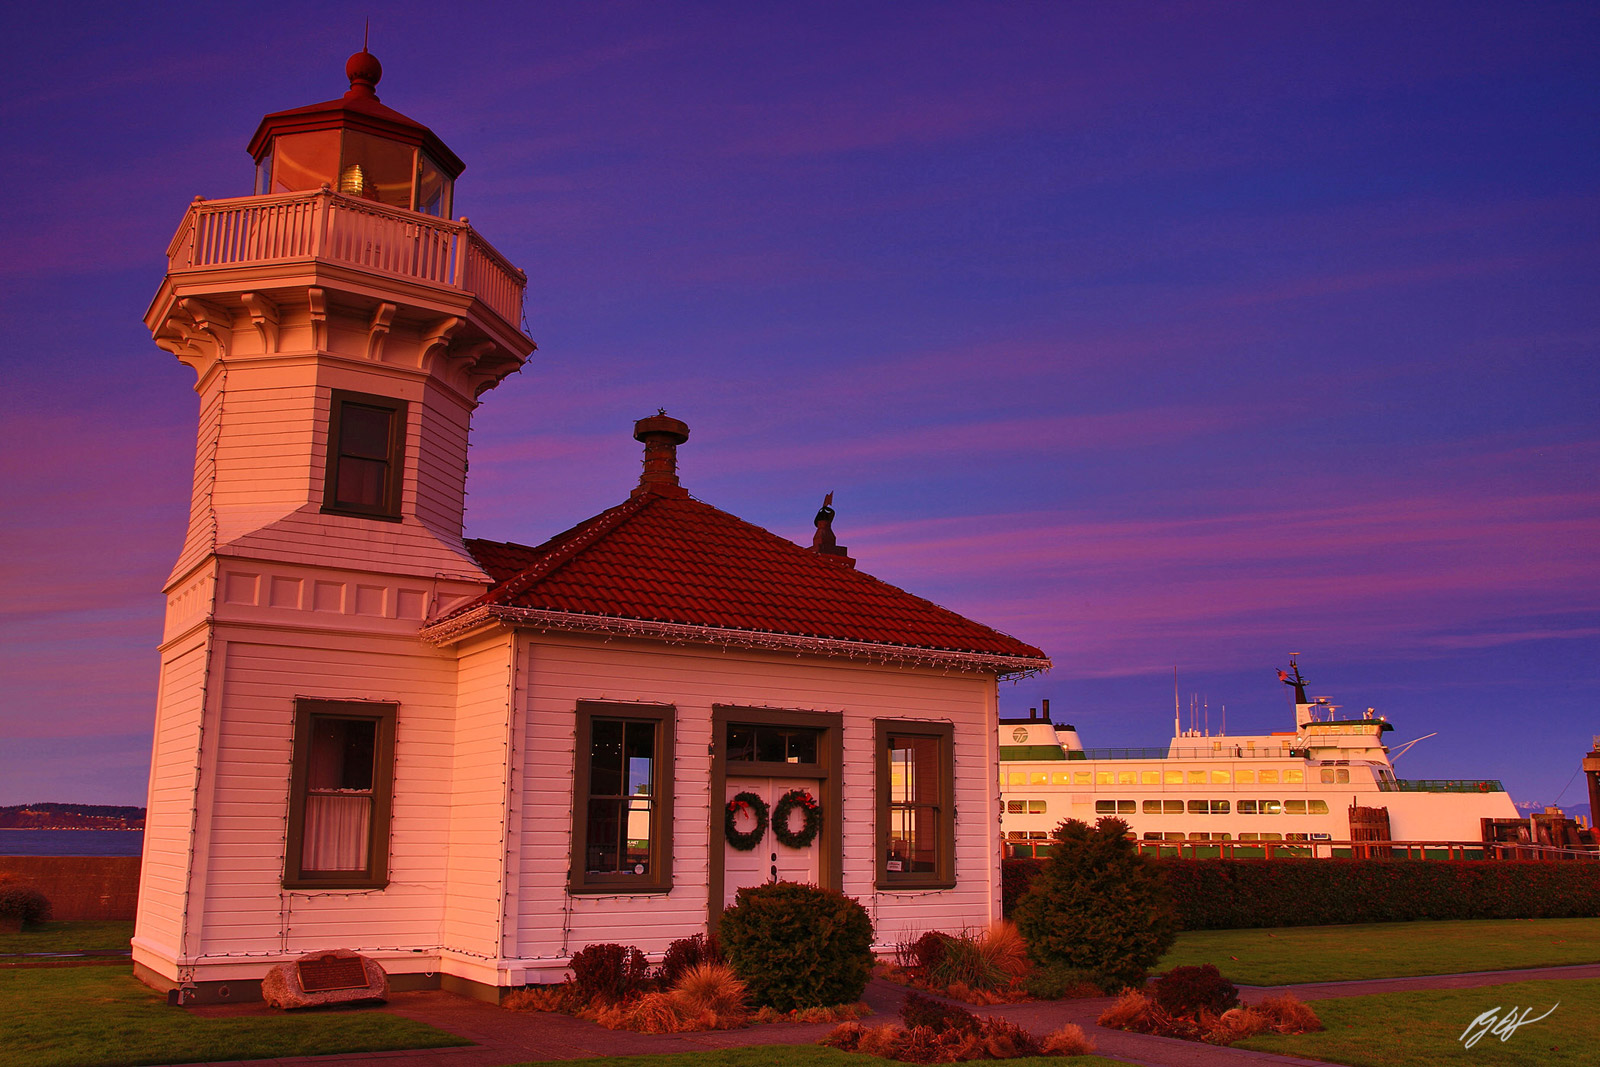 Sunset Mukilteo Lighthouse and Ferry in Mukilteo Lighthouse Park in Washington